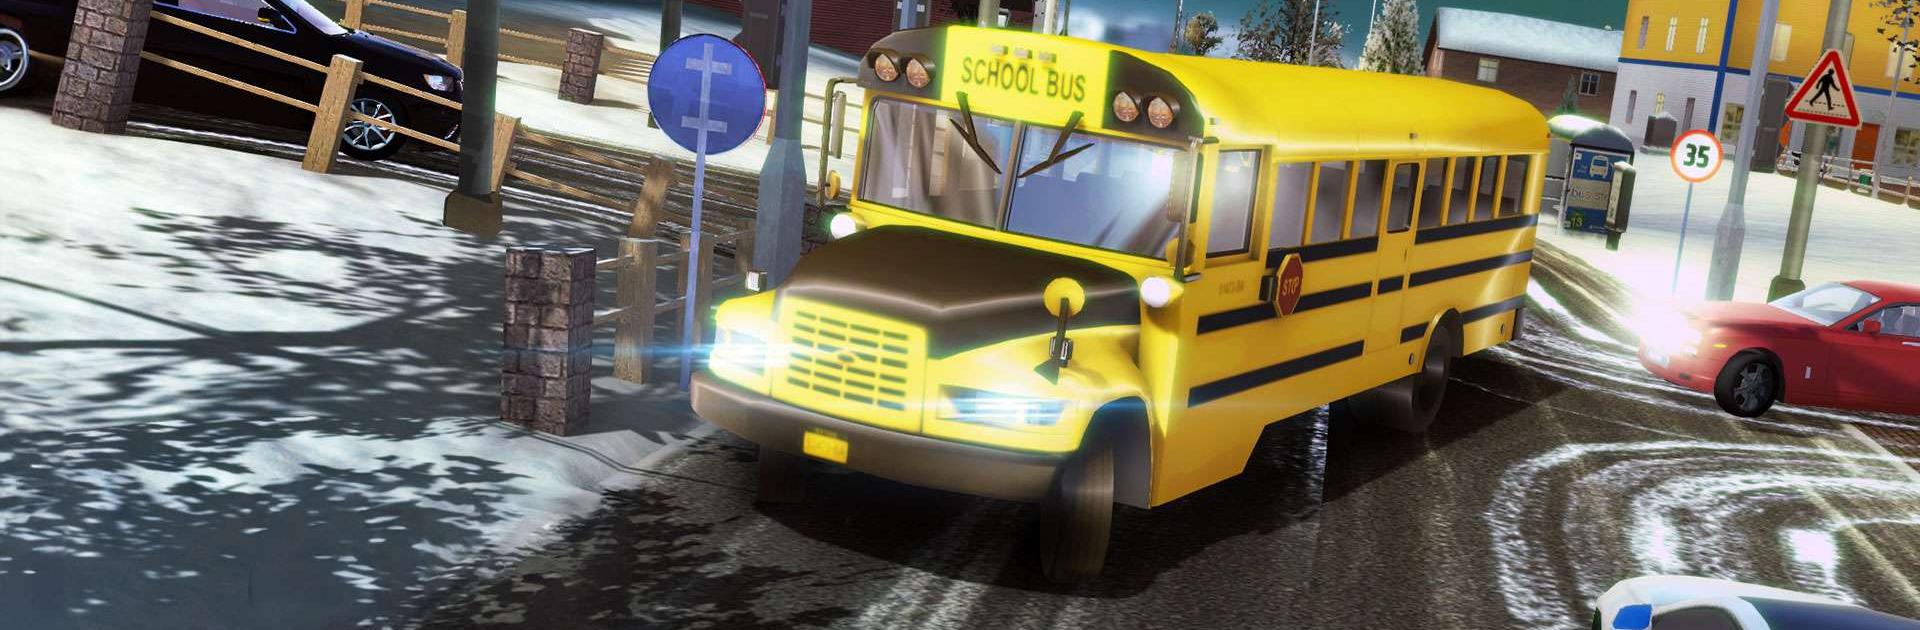 Car Driving School Simulator